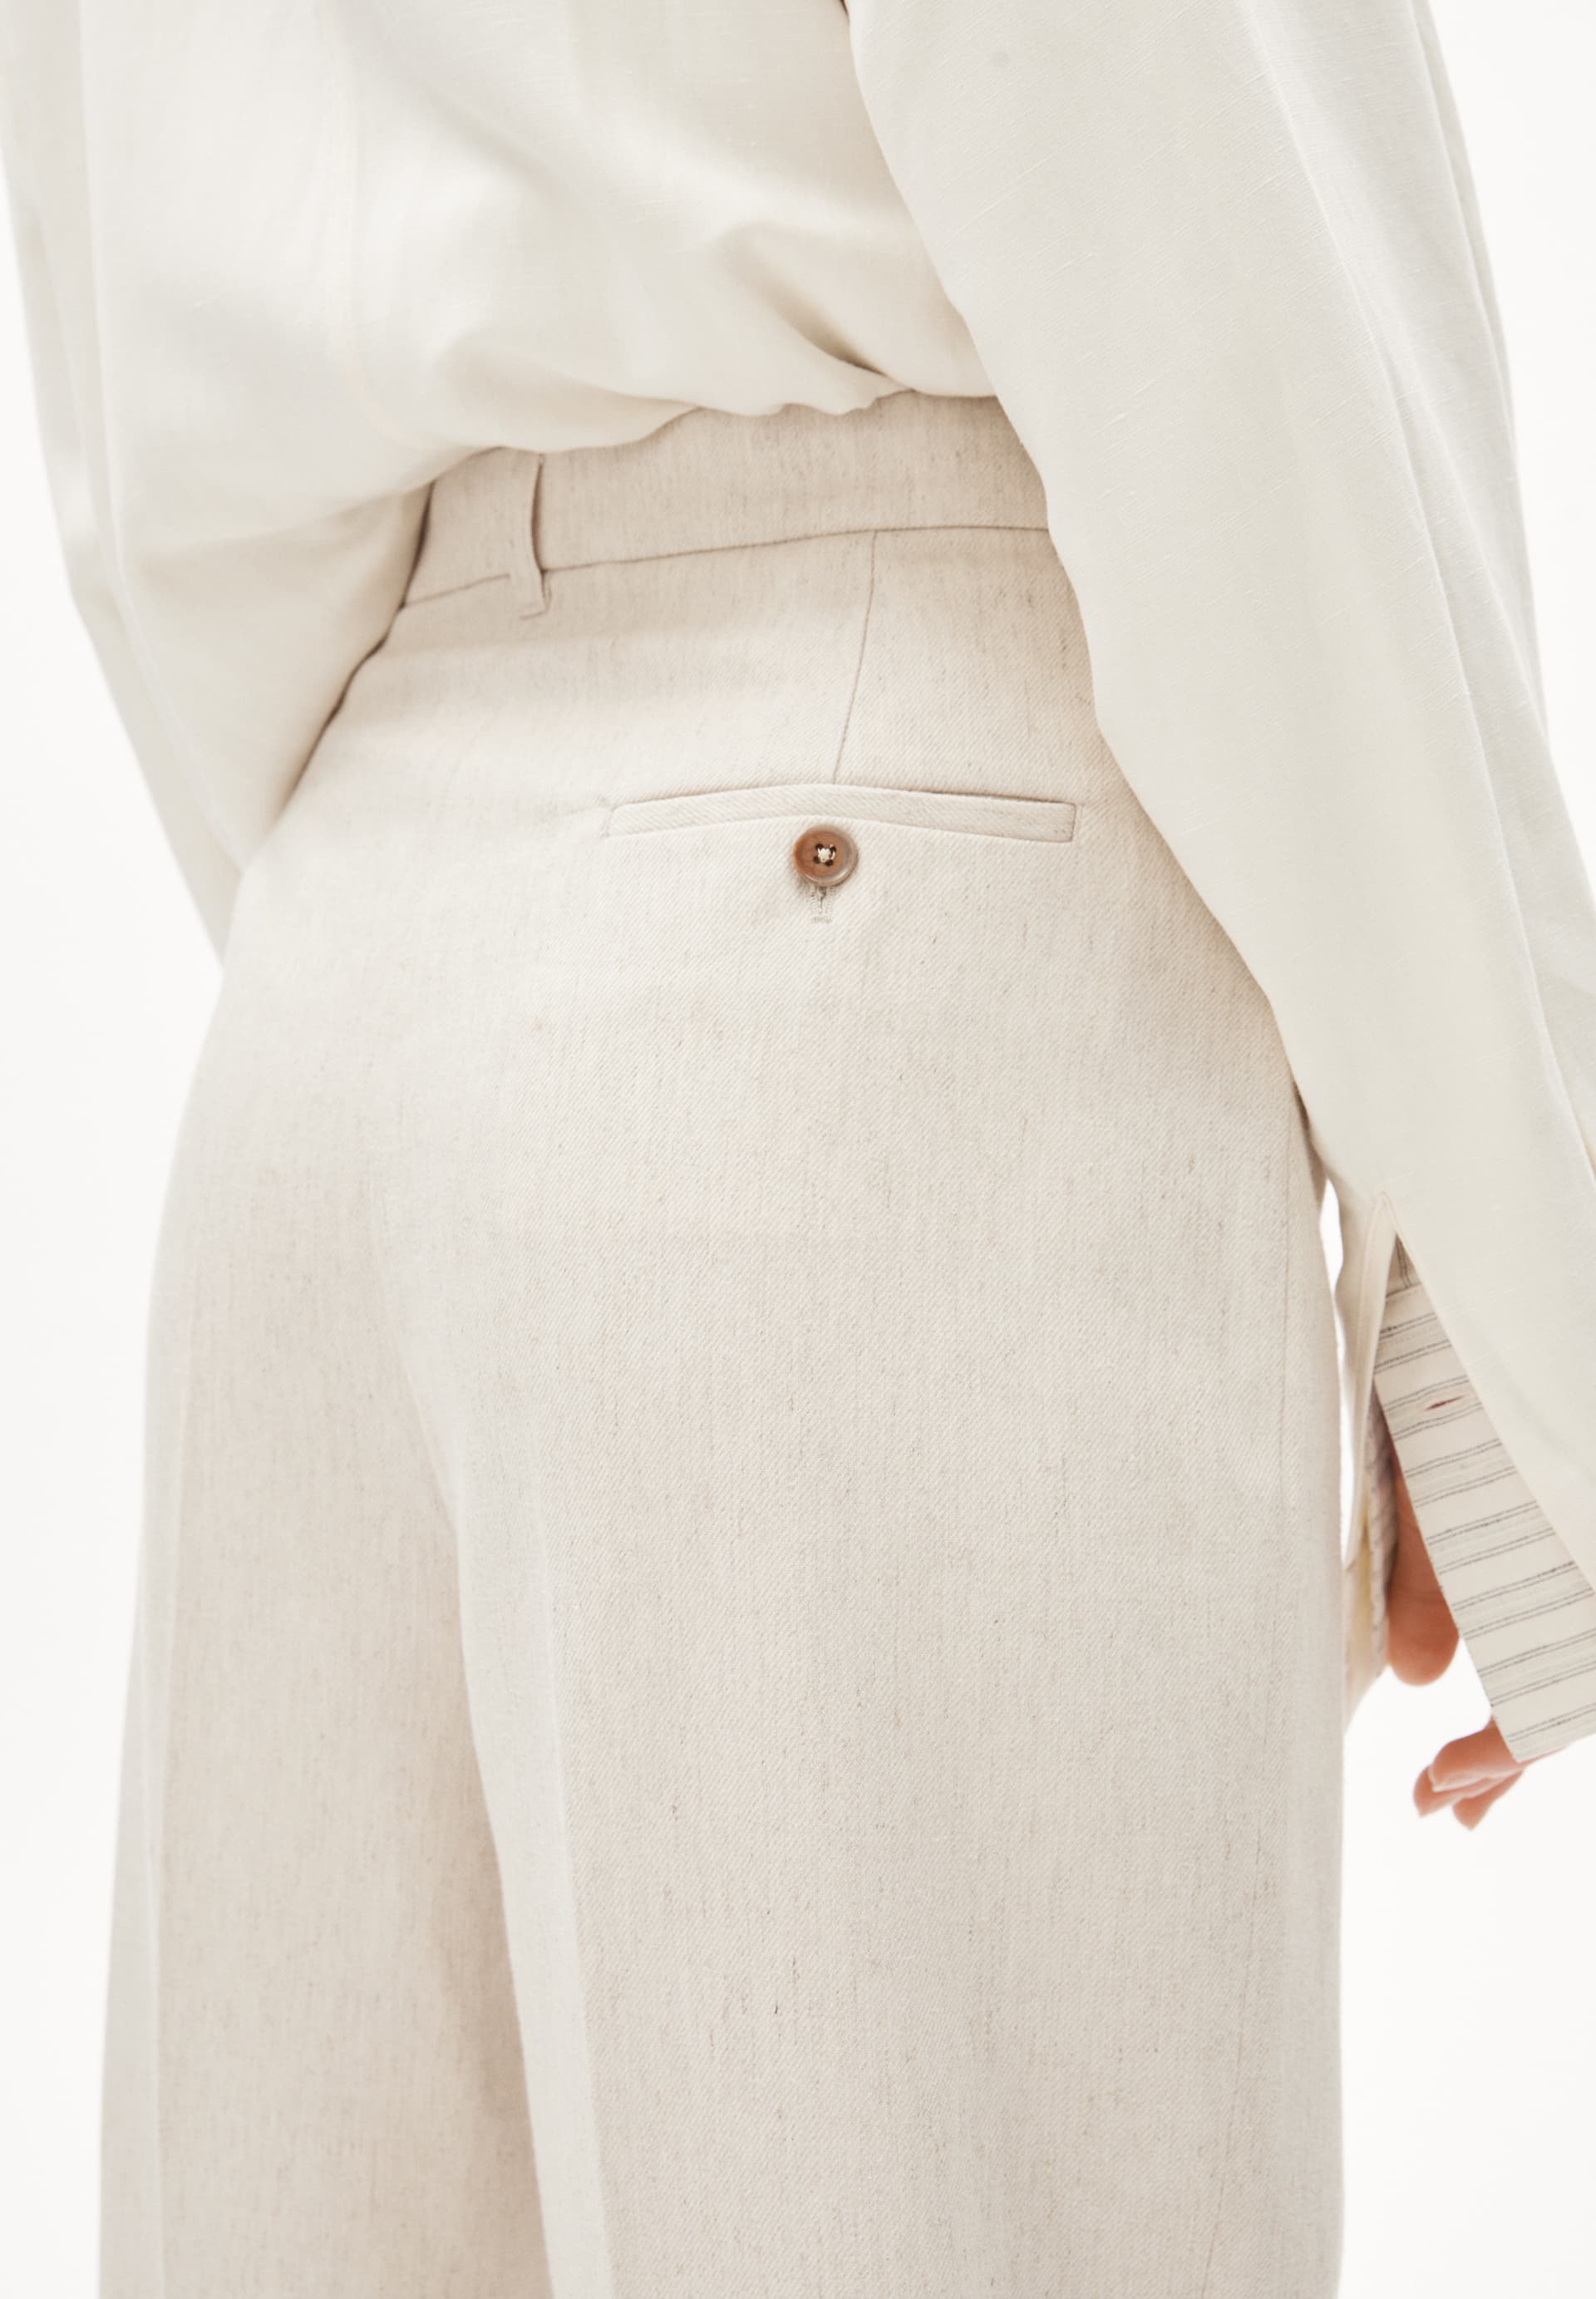 JUMAA STRAIGHT LINO Woven Pants made of Linen-Mix